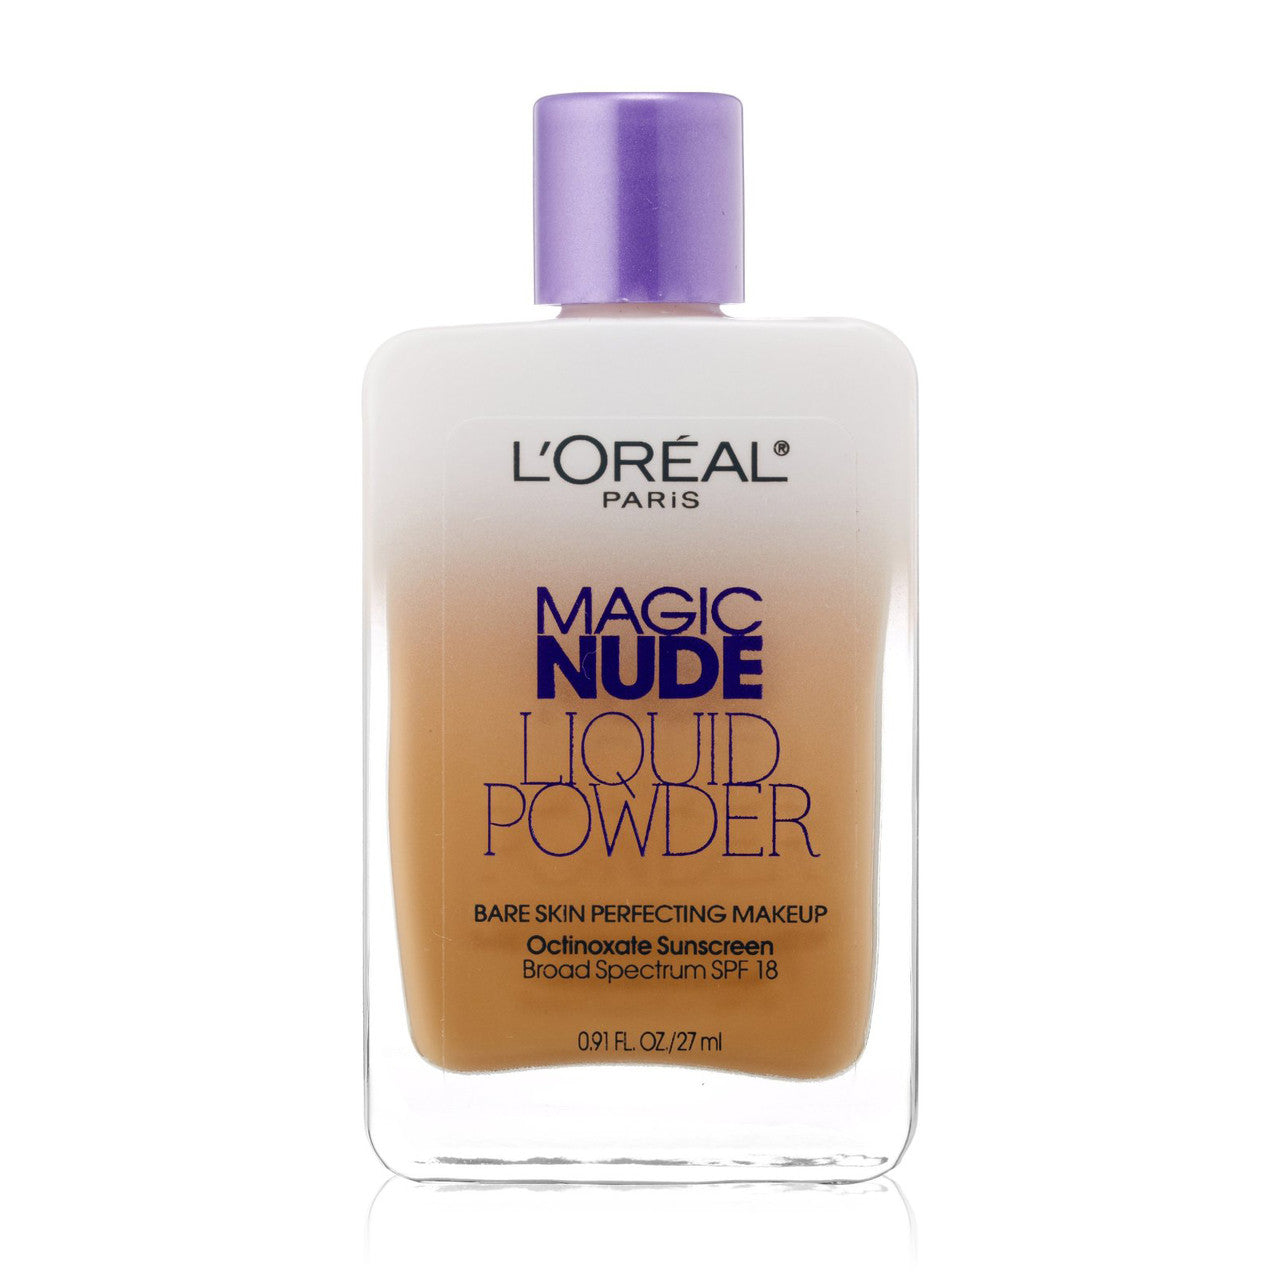 L'OREAL Magic Nude Liquid Powder Bare Skin Perfecting Makeup, Buff Beige (324)